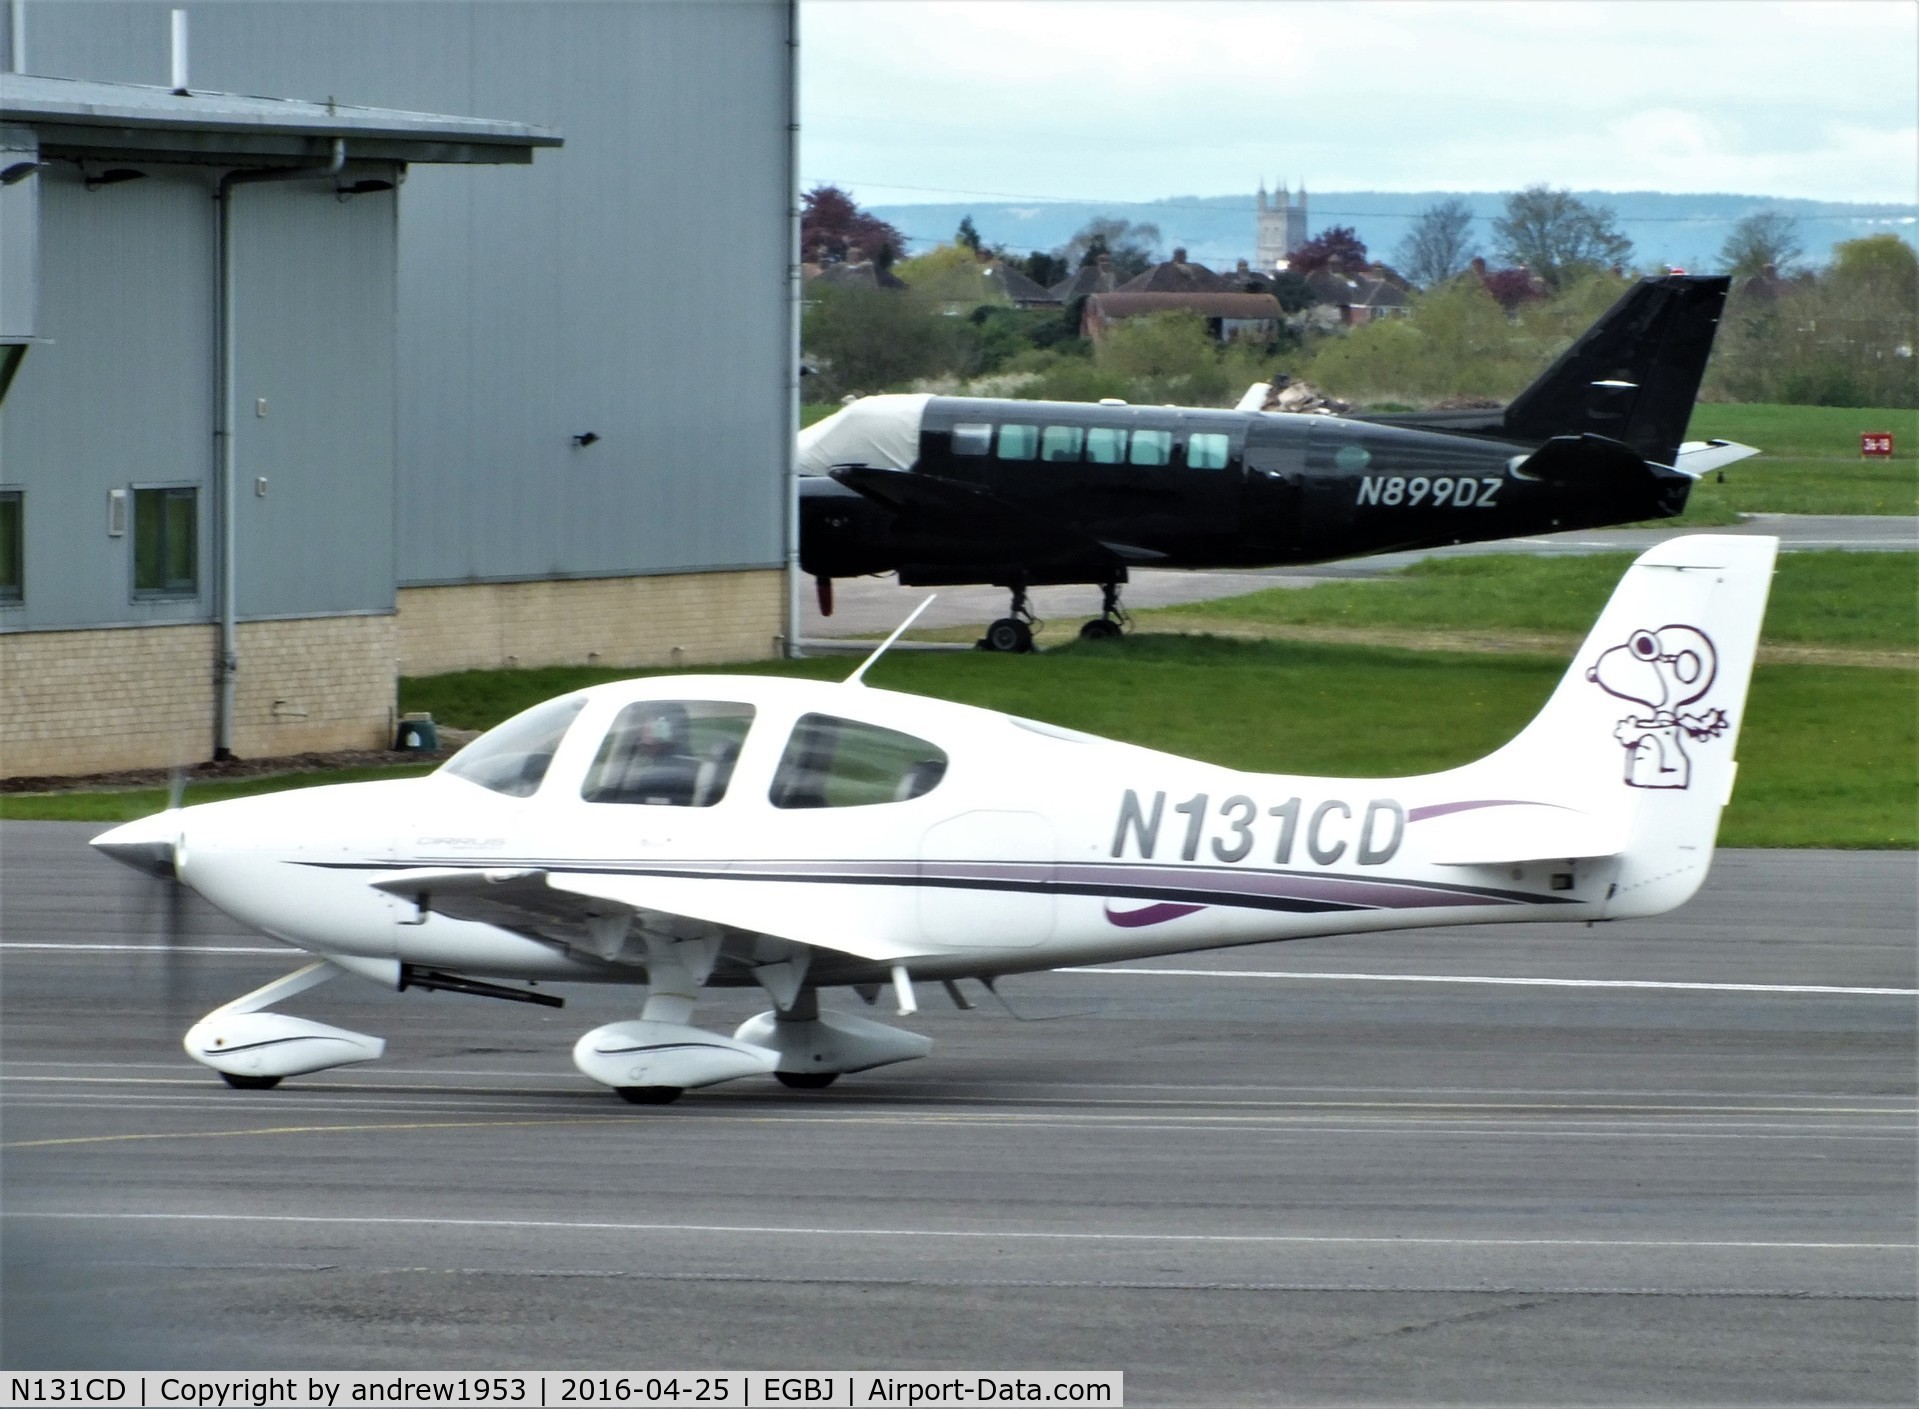 N131CD, 2000 Cirrus SR20 C/N 1031, N131CD at Gloucestershire Airport.